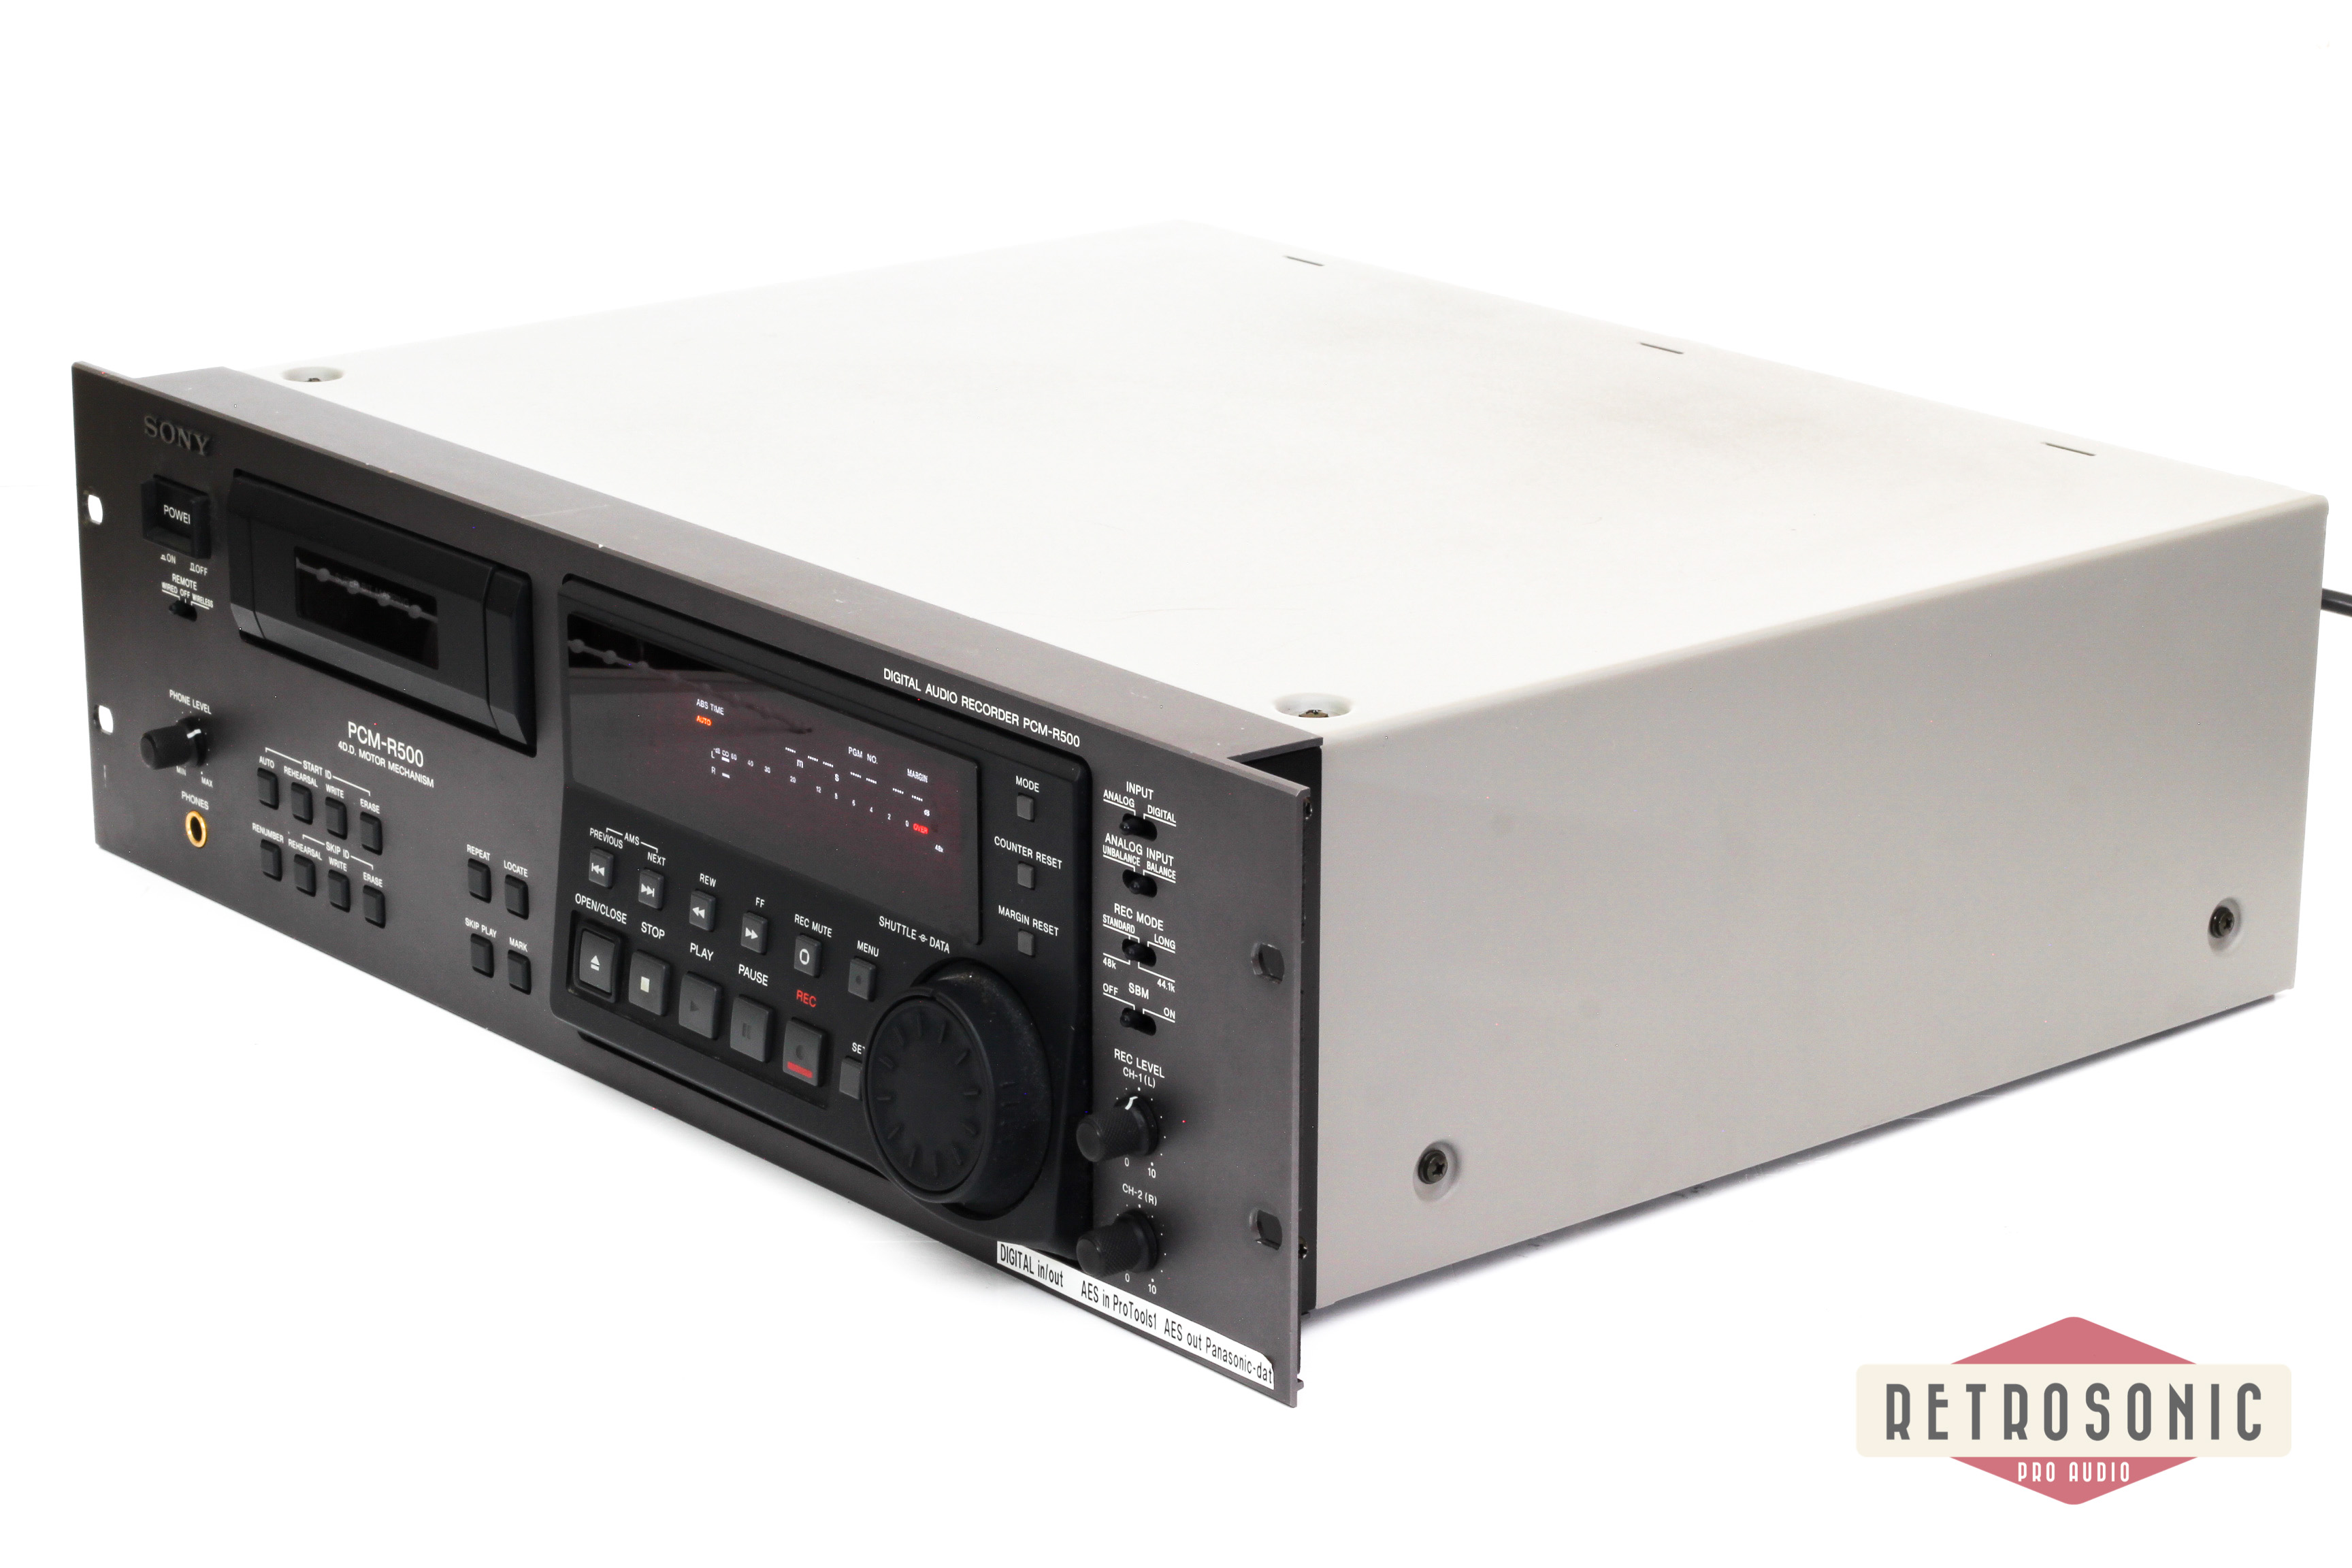 Sony PCM-R500 DAT-recorder